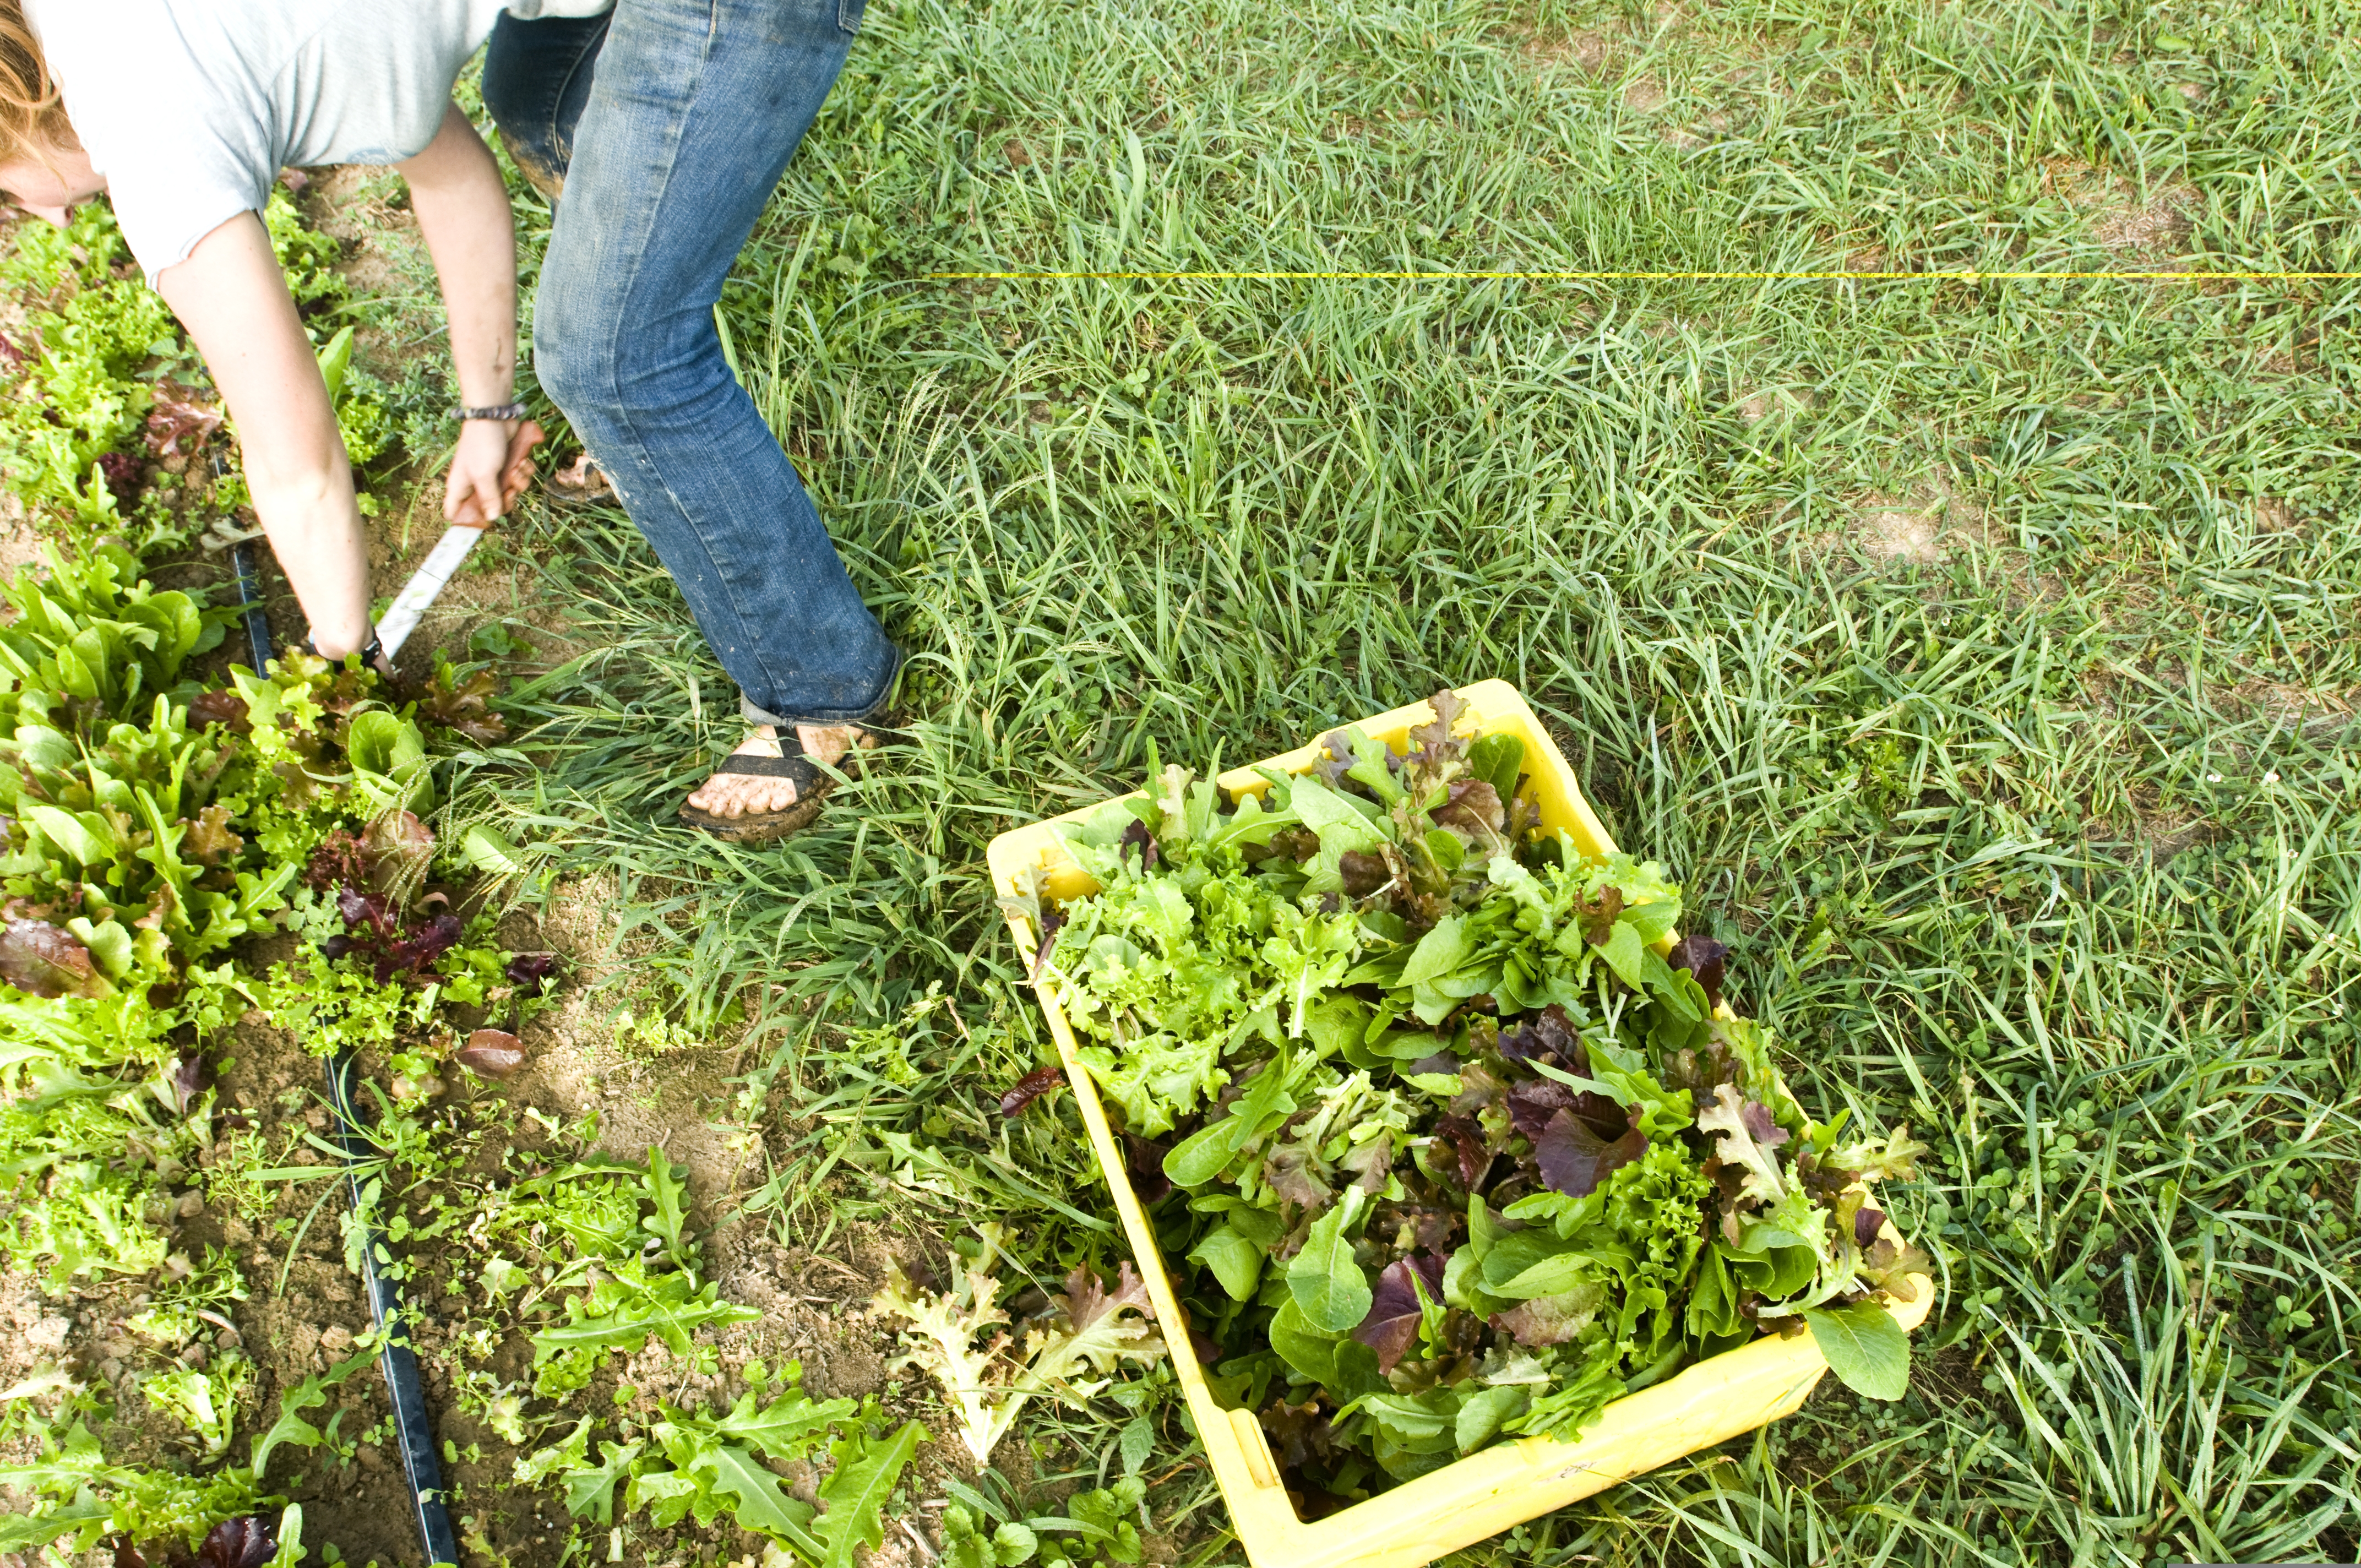 Woman harvesting lettuce.